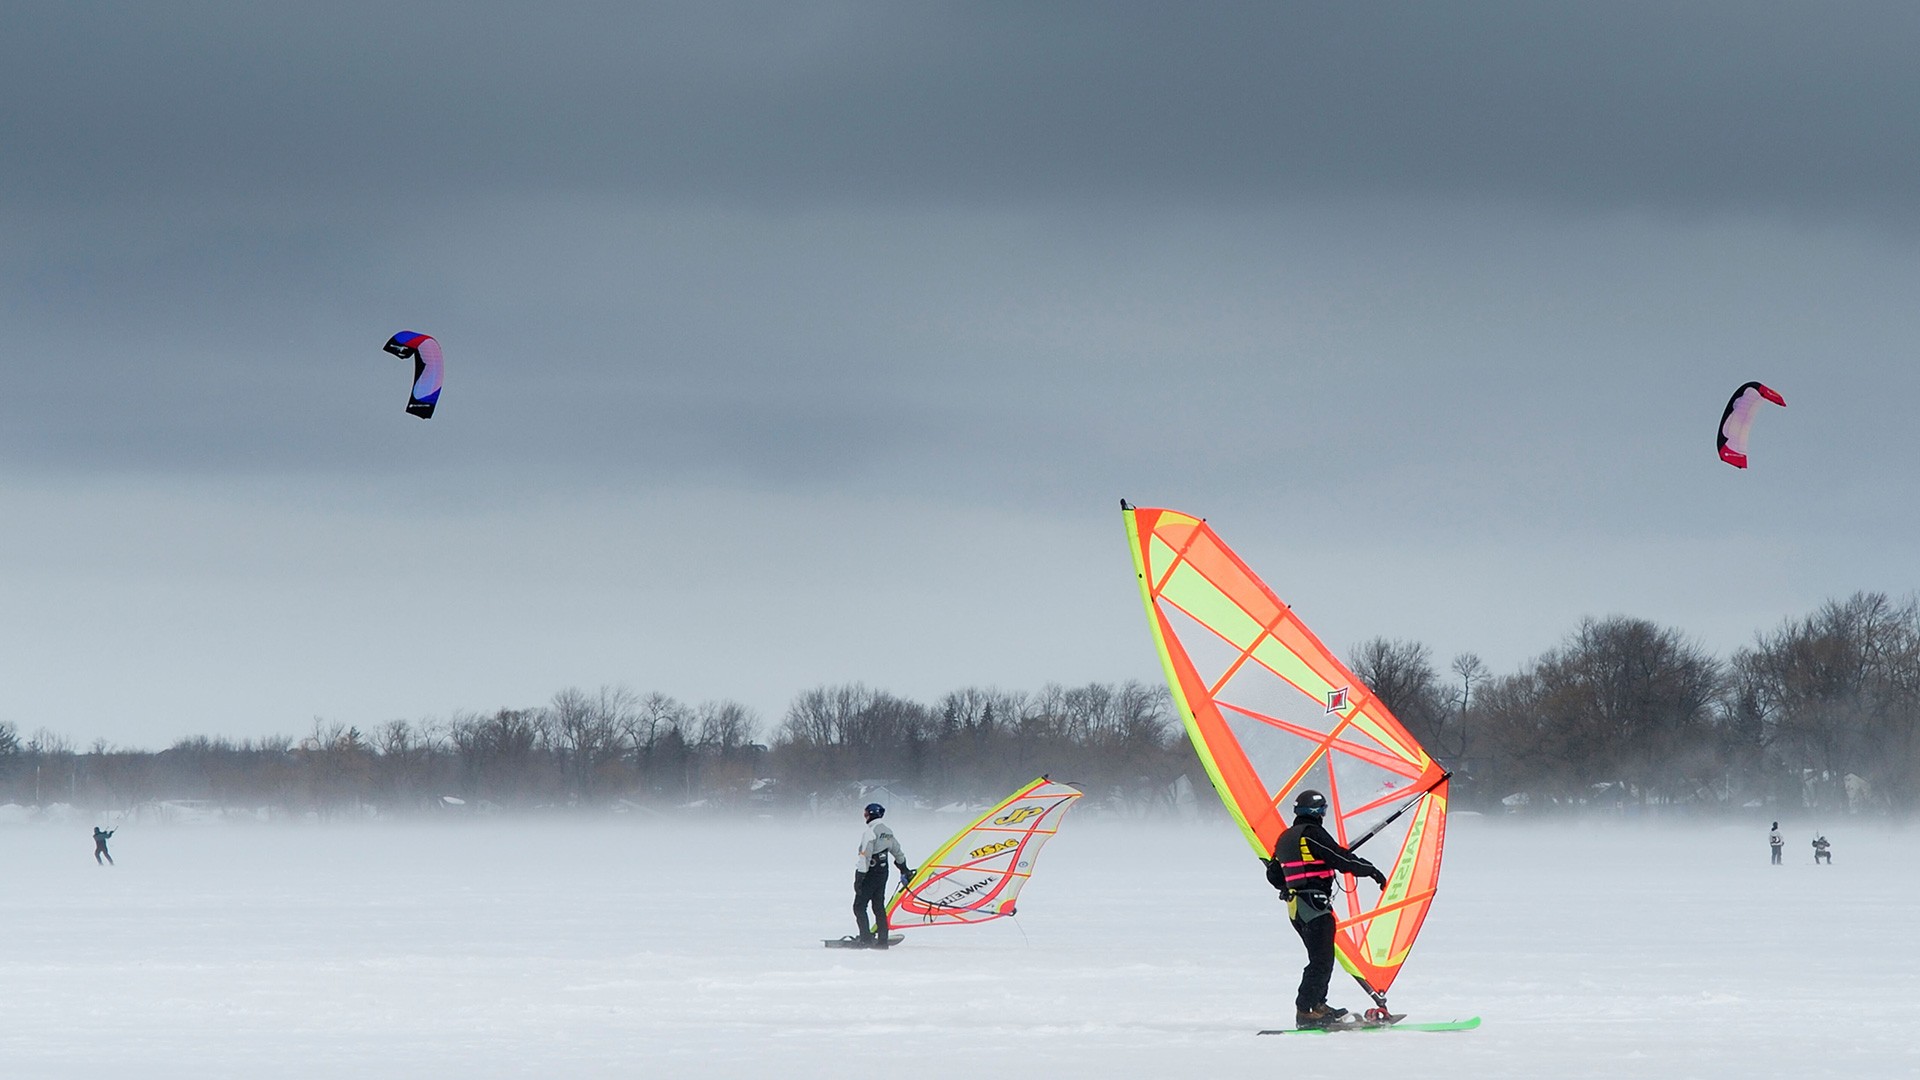 People 1920x1080 nature landscape sport sky men kite surfing winter snow parachutes trees windy